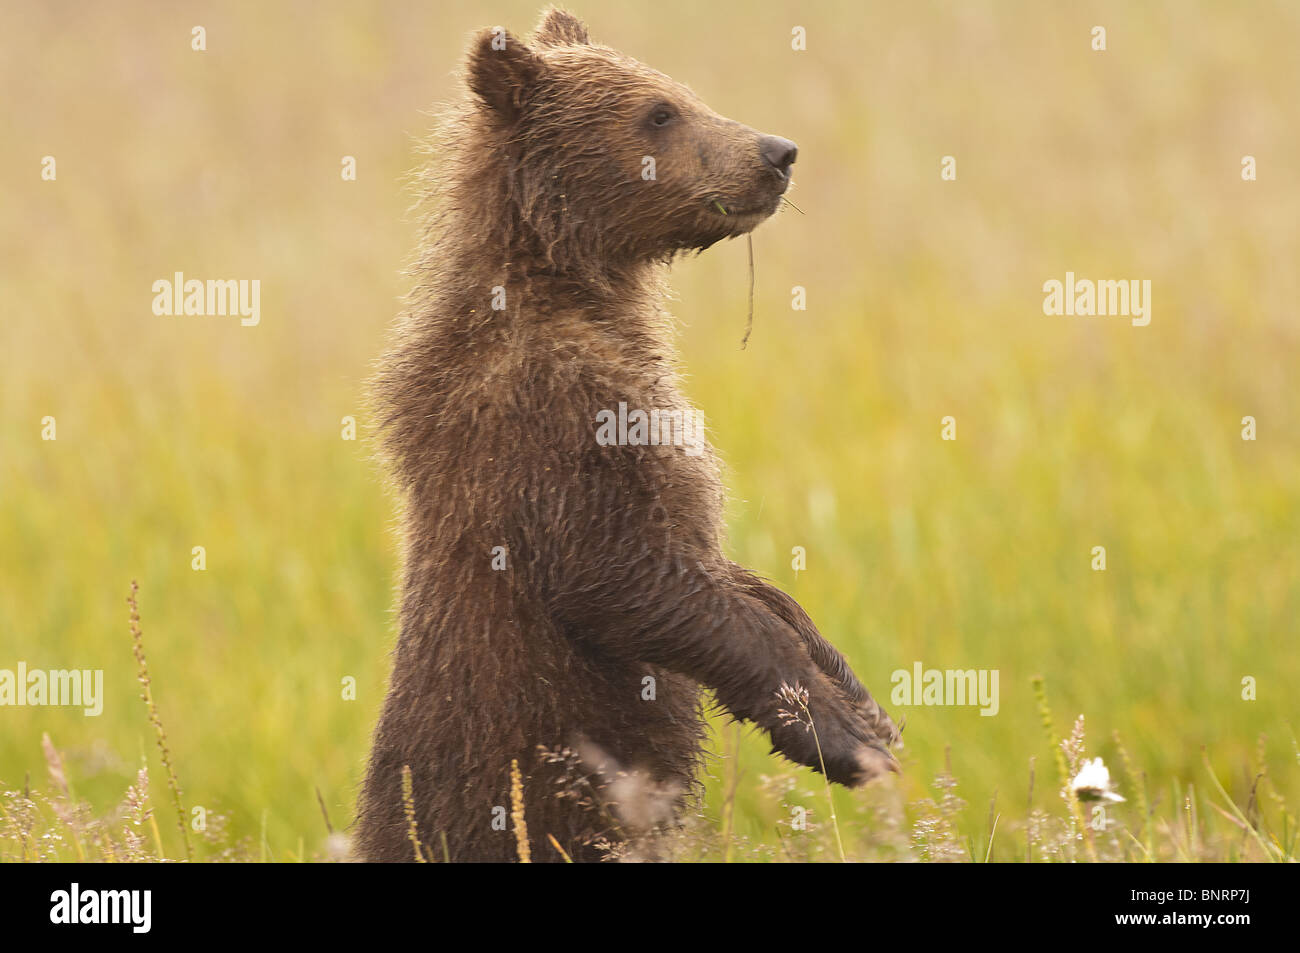 Stock photo of an Alaskan coastal brown bear cub standing upright in a meadow. Stock Photo